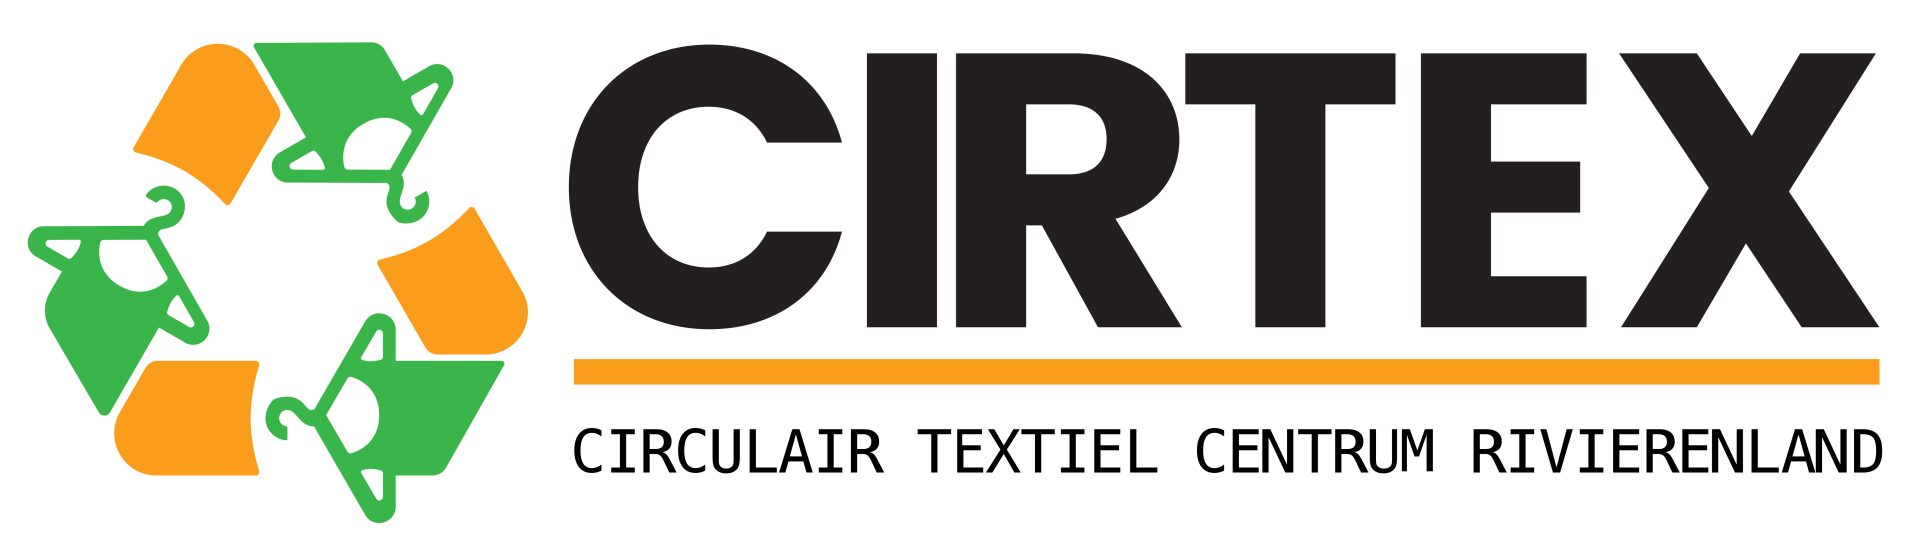 Cirtex, circulair textiel centrum rivierenland logo